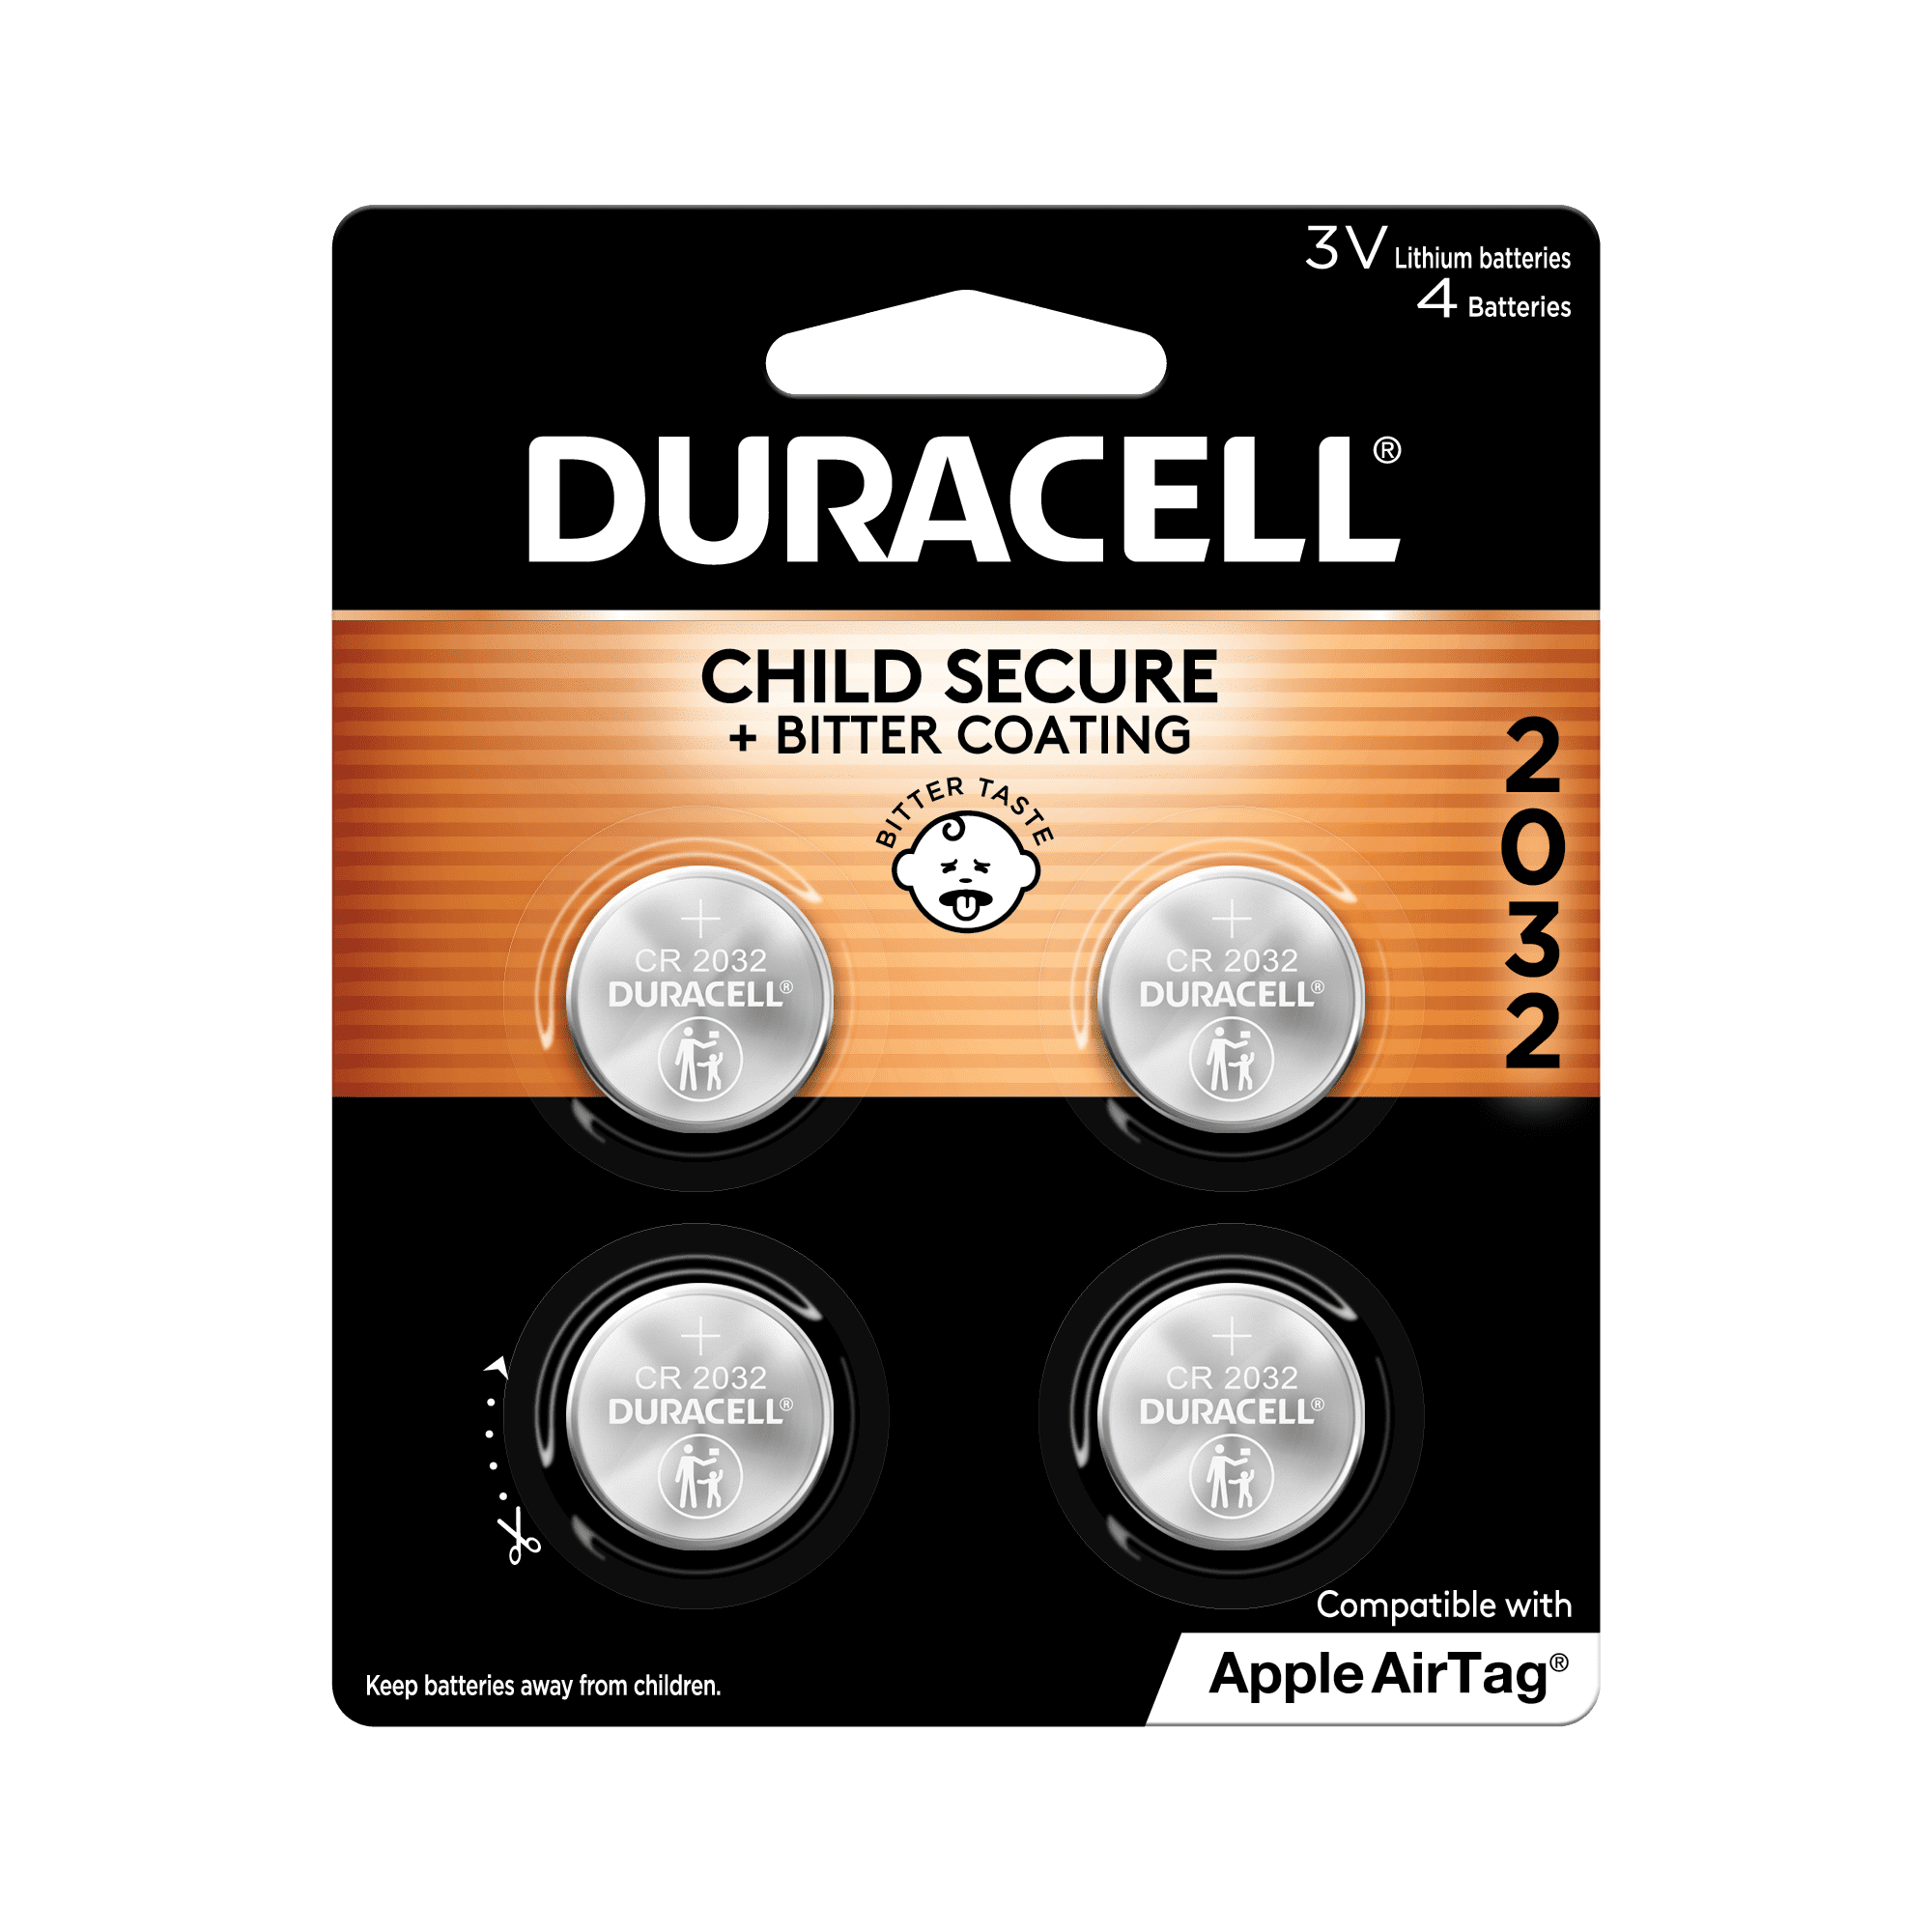 Duracell DL2032 Lithium Medical Battery, 3V - 4 pack